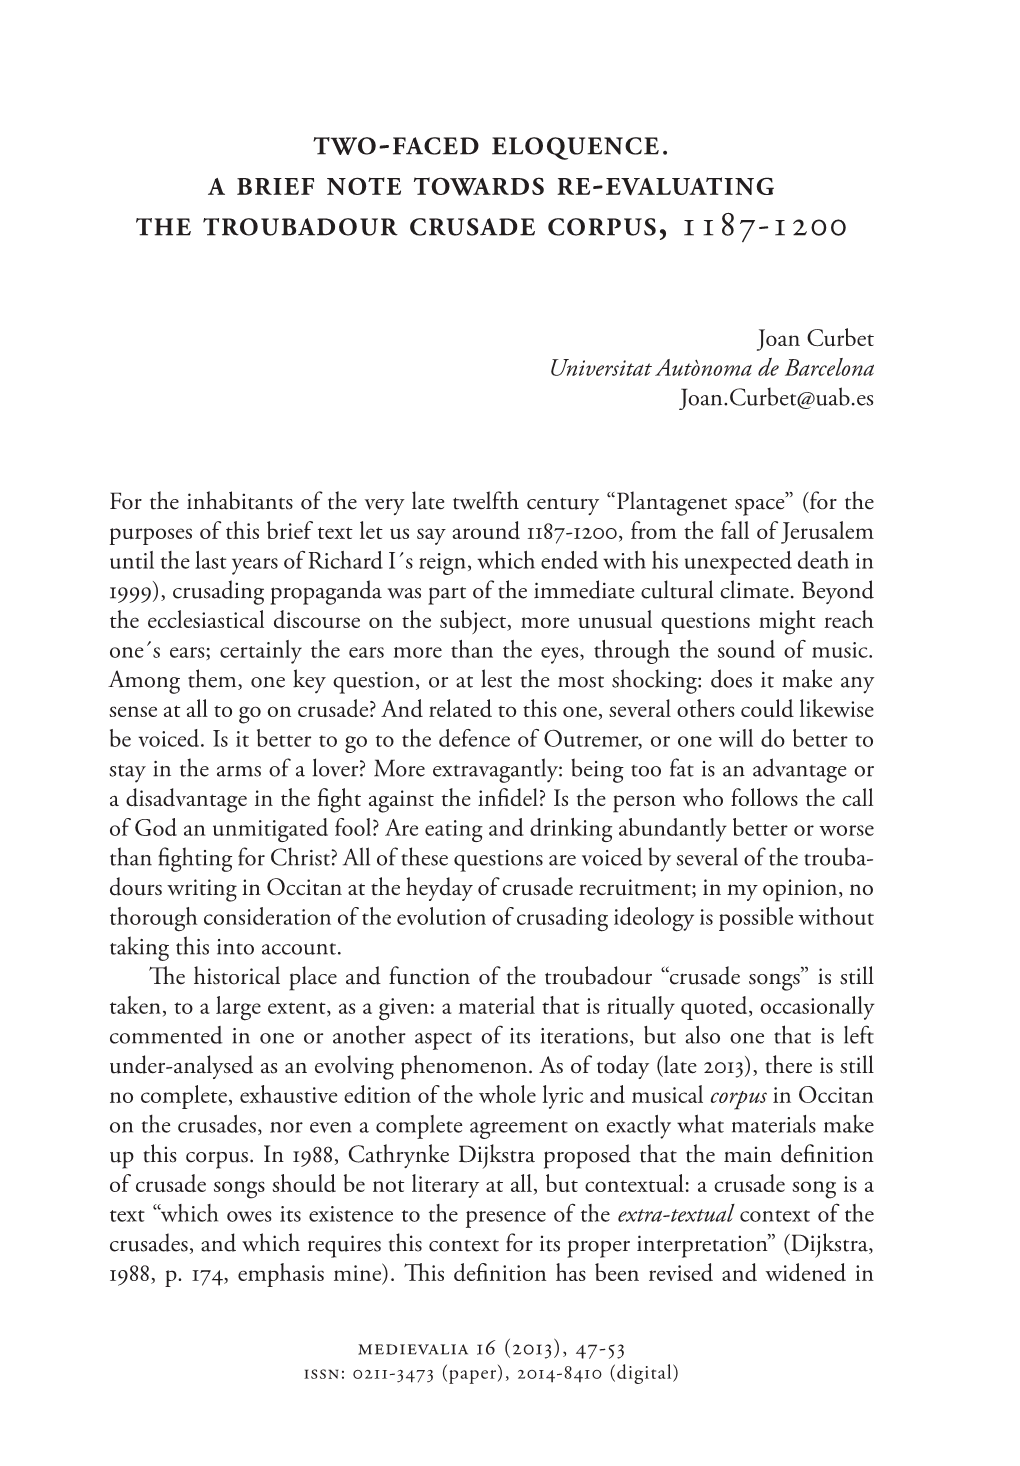 Evaluating the Troubadour Crusade Corpus Joan Curbet